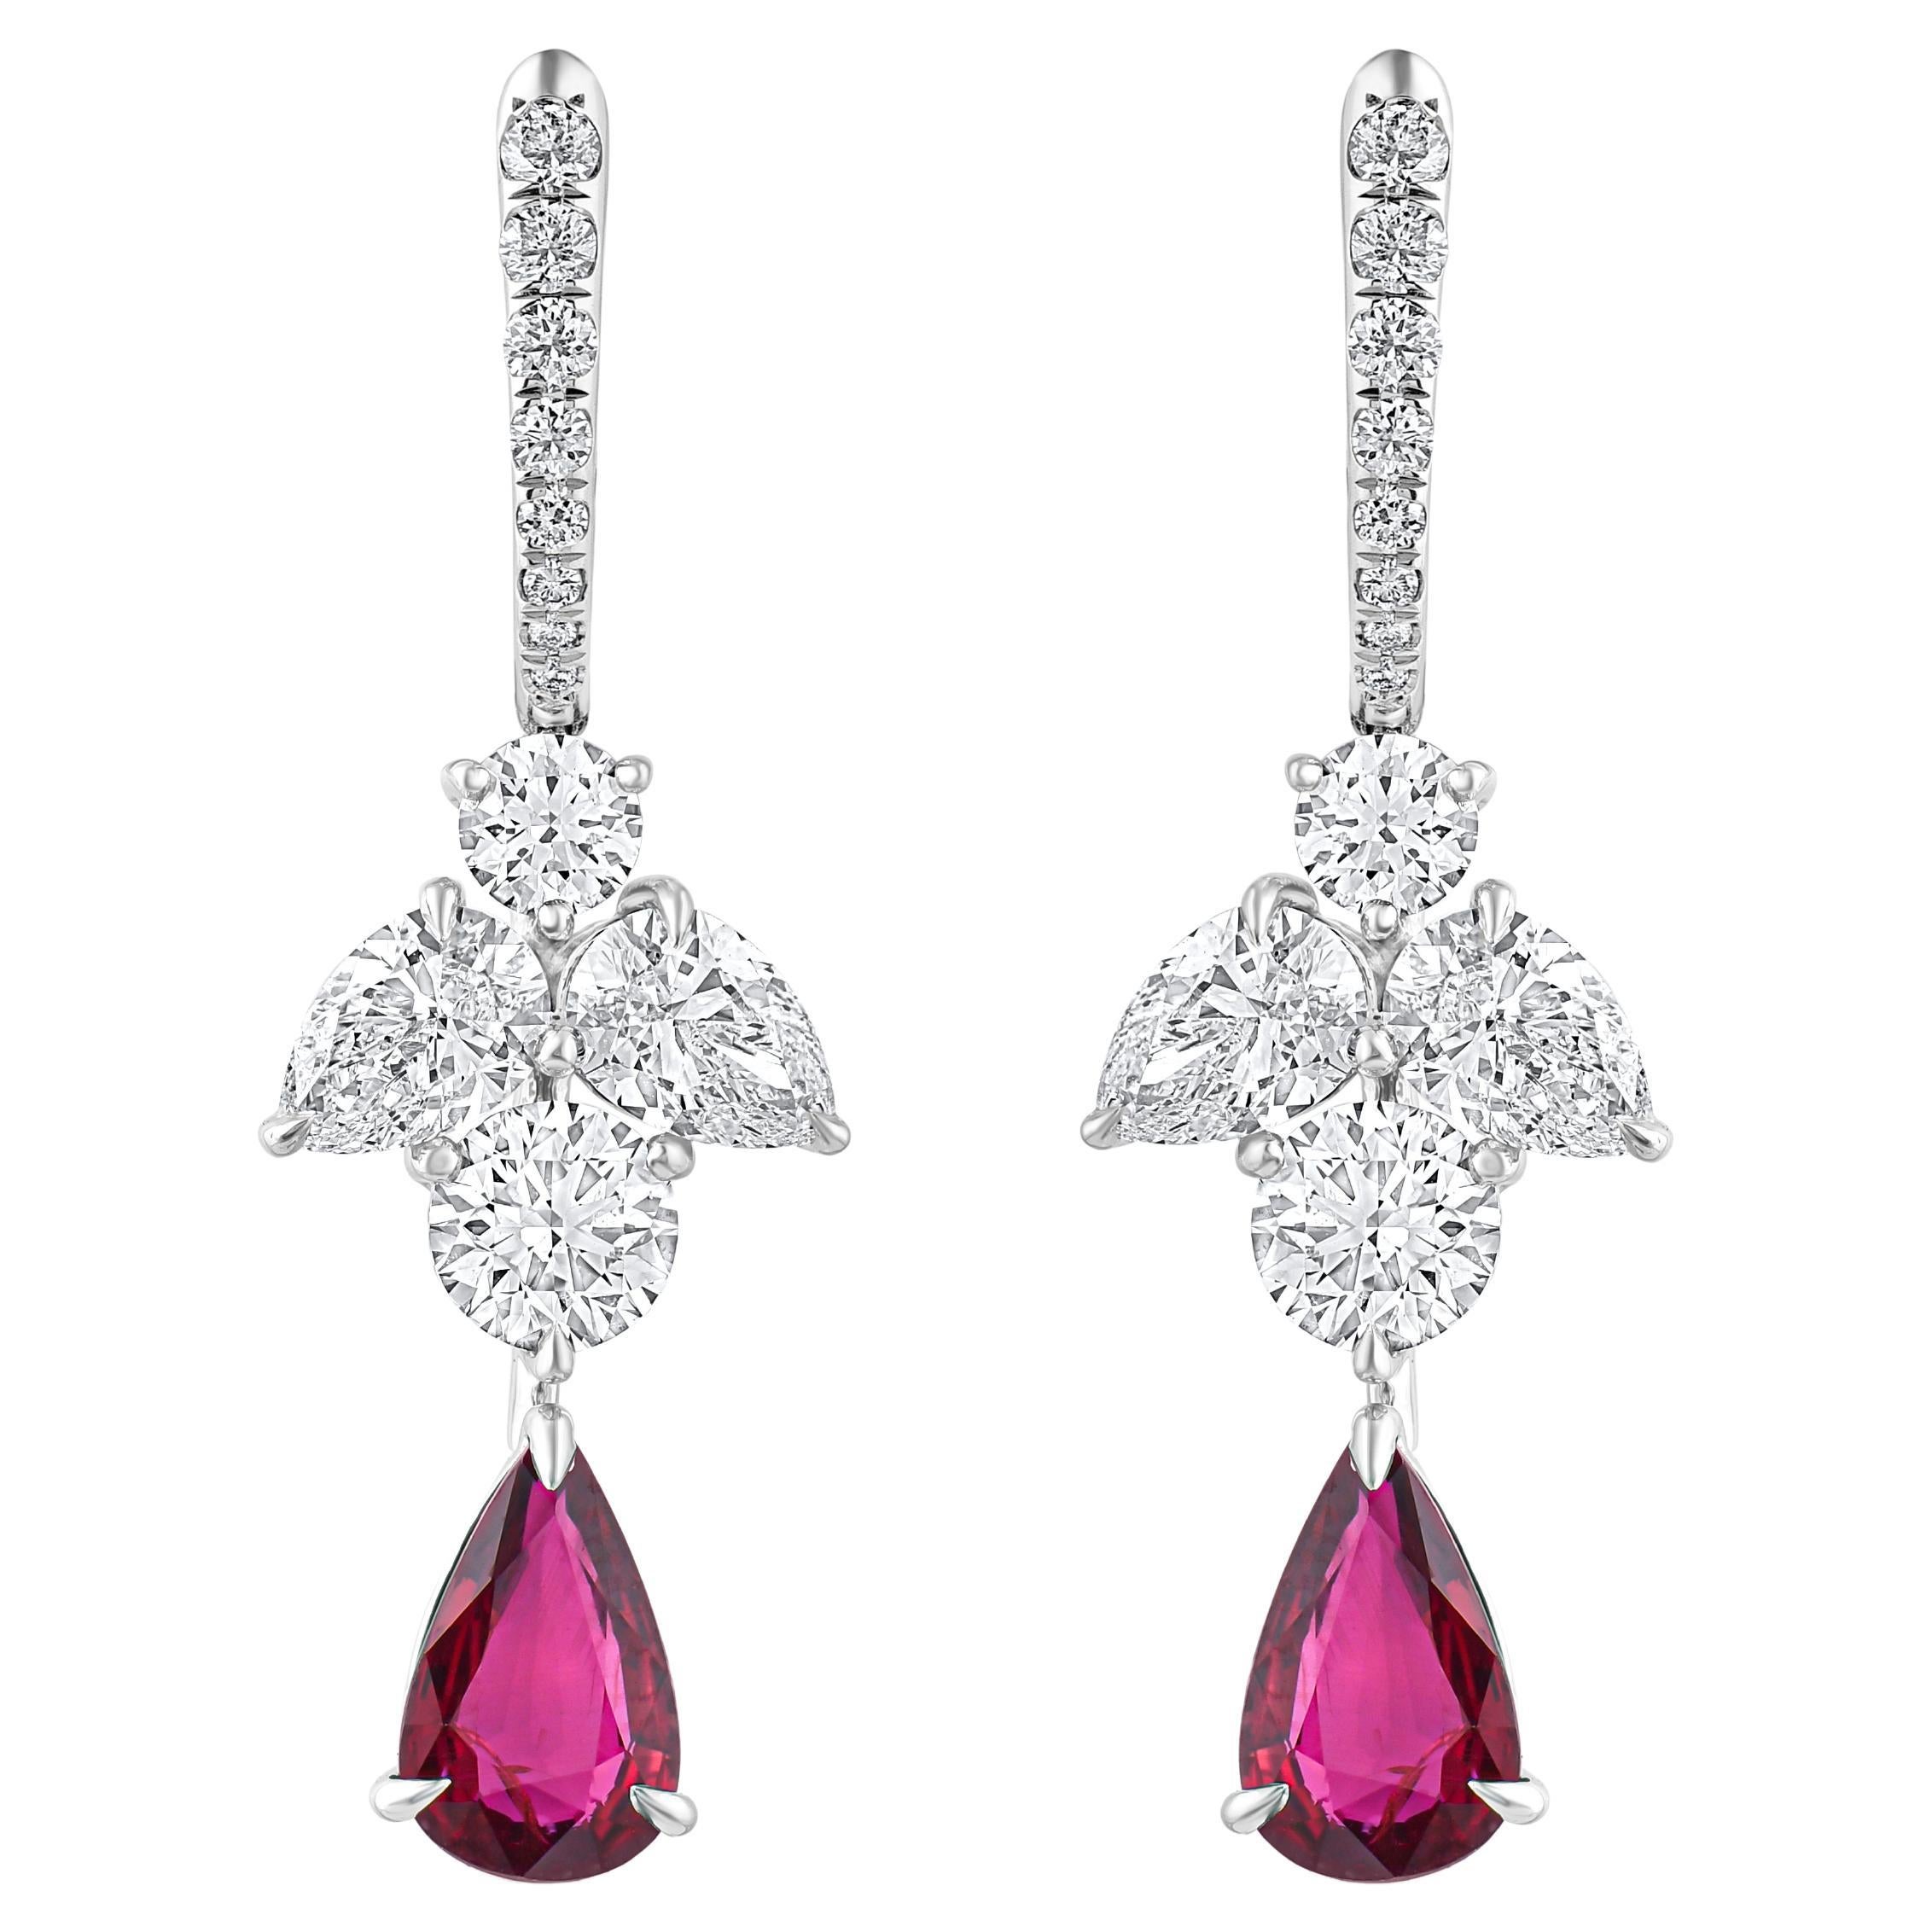 HARAKH 3 Carat Brilliant Cut Colorless Diamond and Ruby Gemstone Earrings